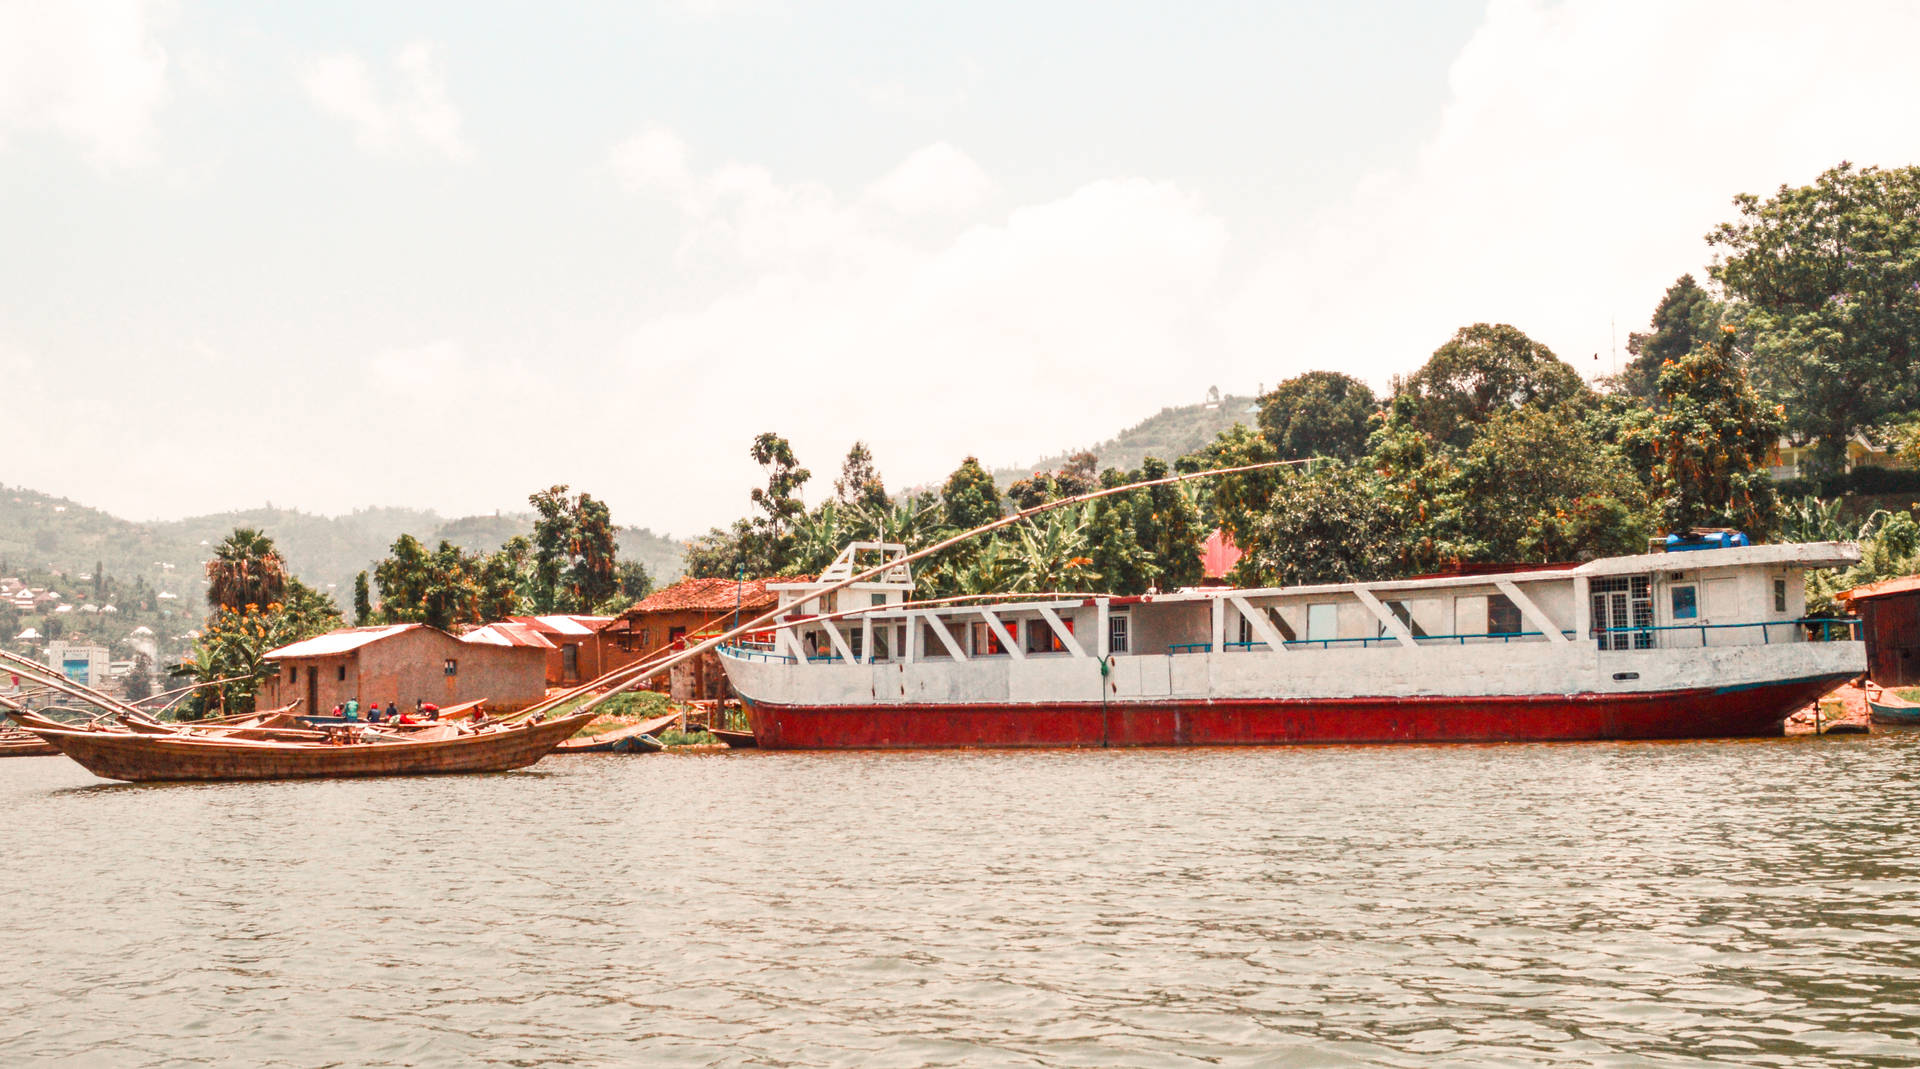 Rwandaboote Im Wasser Wallpaper